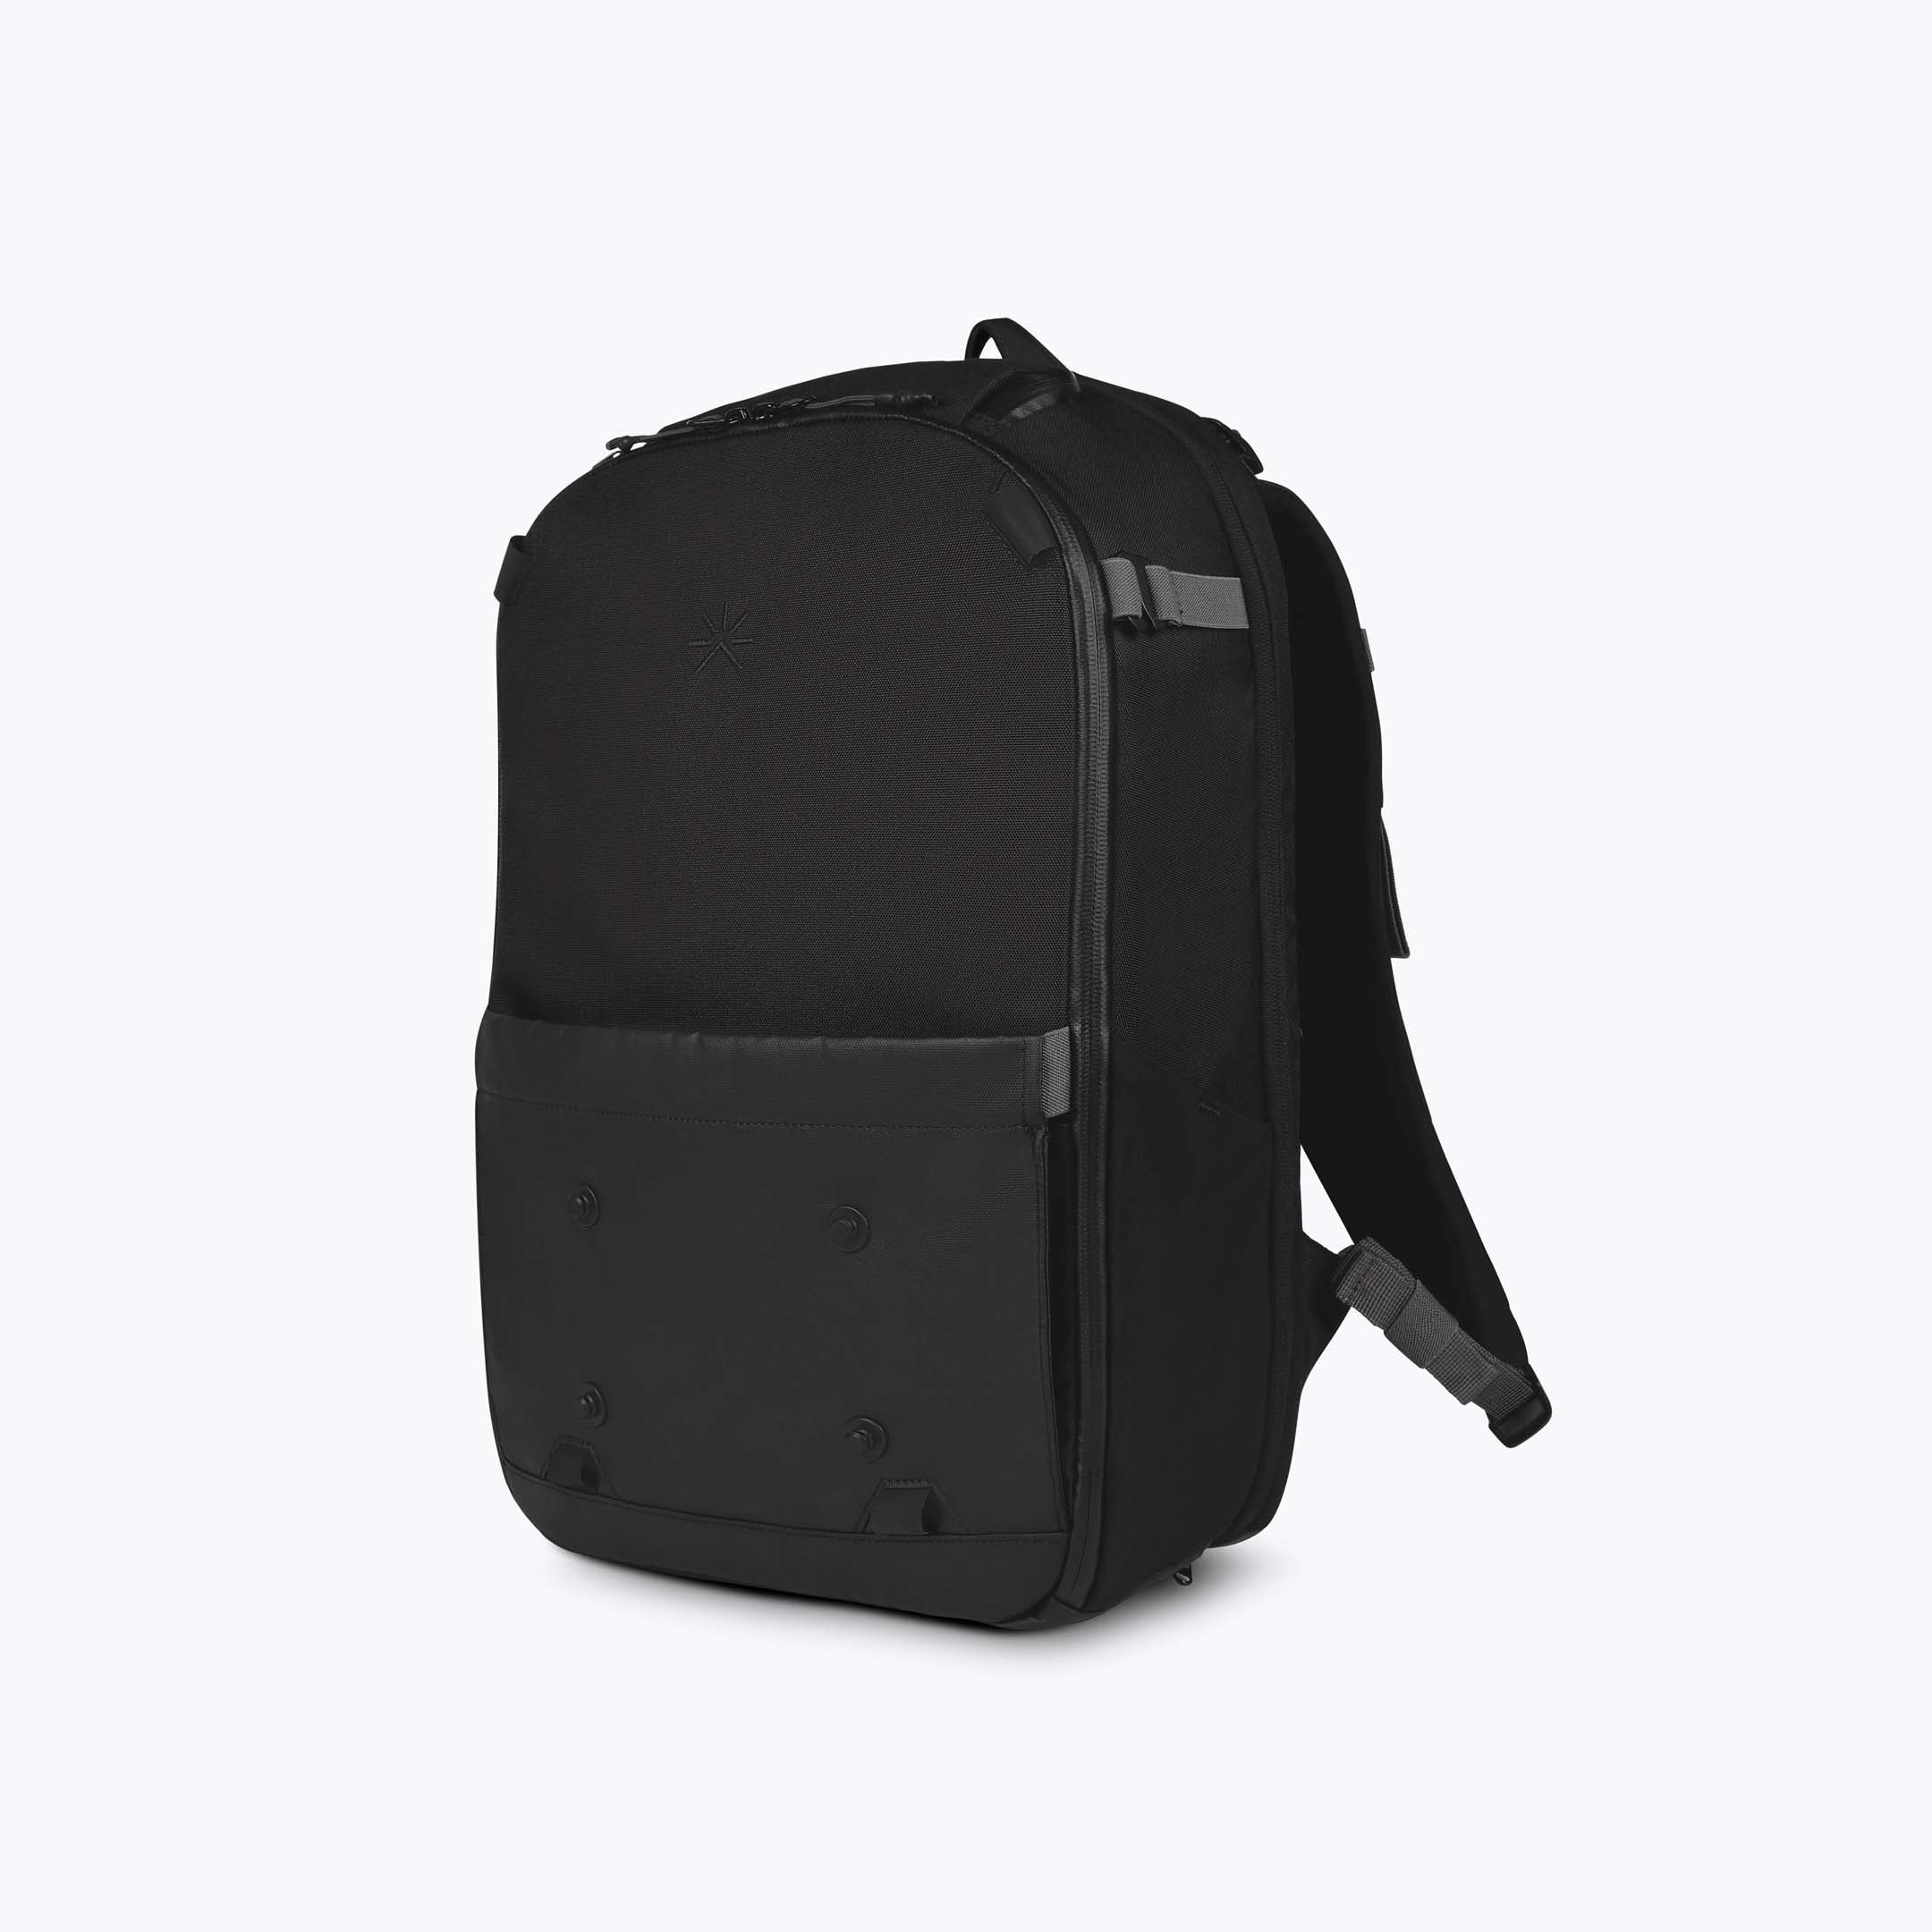 Hive Backpack Core Black + Wardrobe + Smart Packing Cube 12L Core Black + FidLock? Toiletry Core Black for Hive + FidLock? Pouch Core Black for Hive + Camera Cube XXL